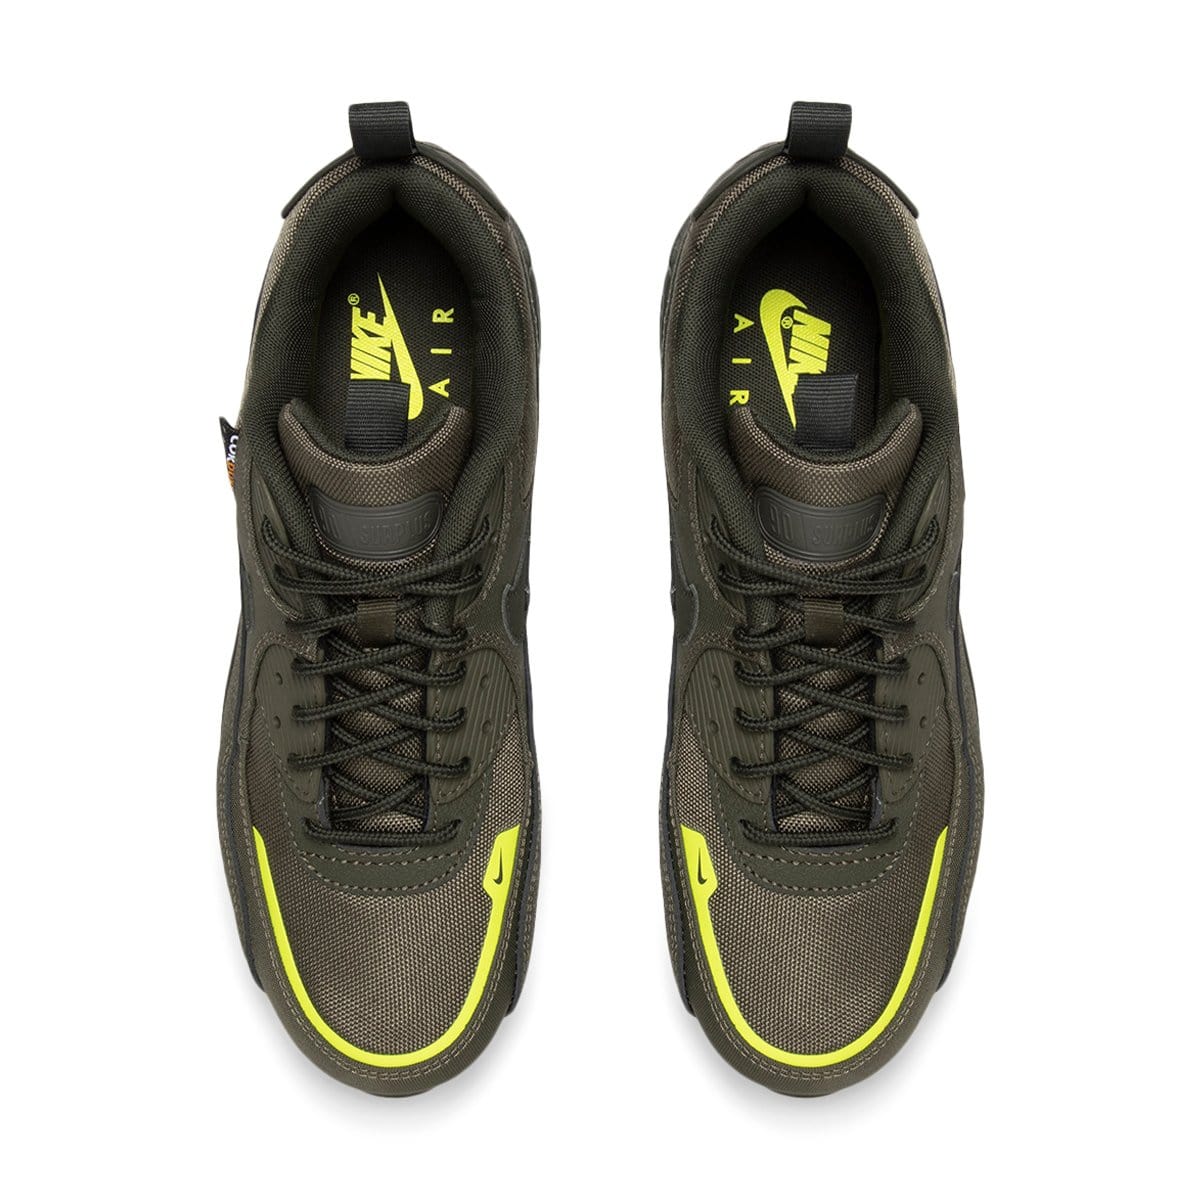 Nike Air Max 90 Surplus - Cq7743-300 - Sneakersnstuff (SNS)